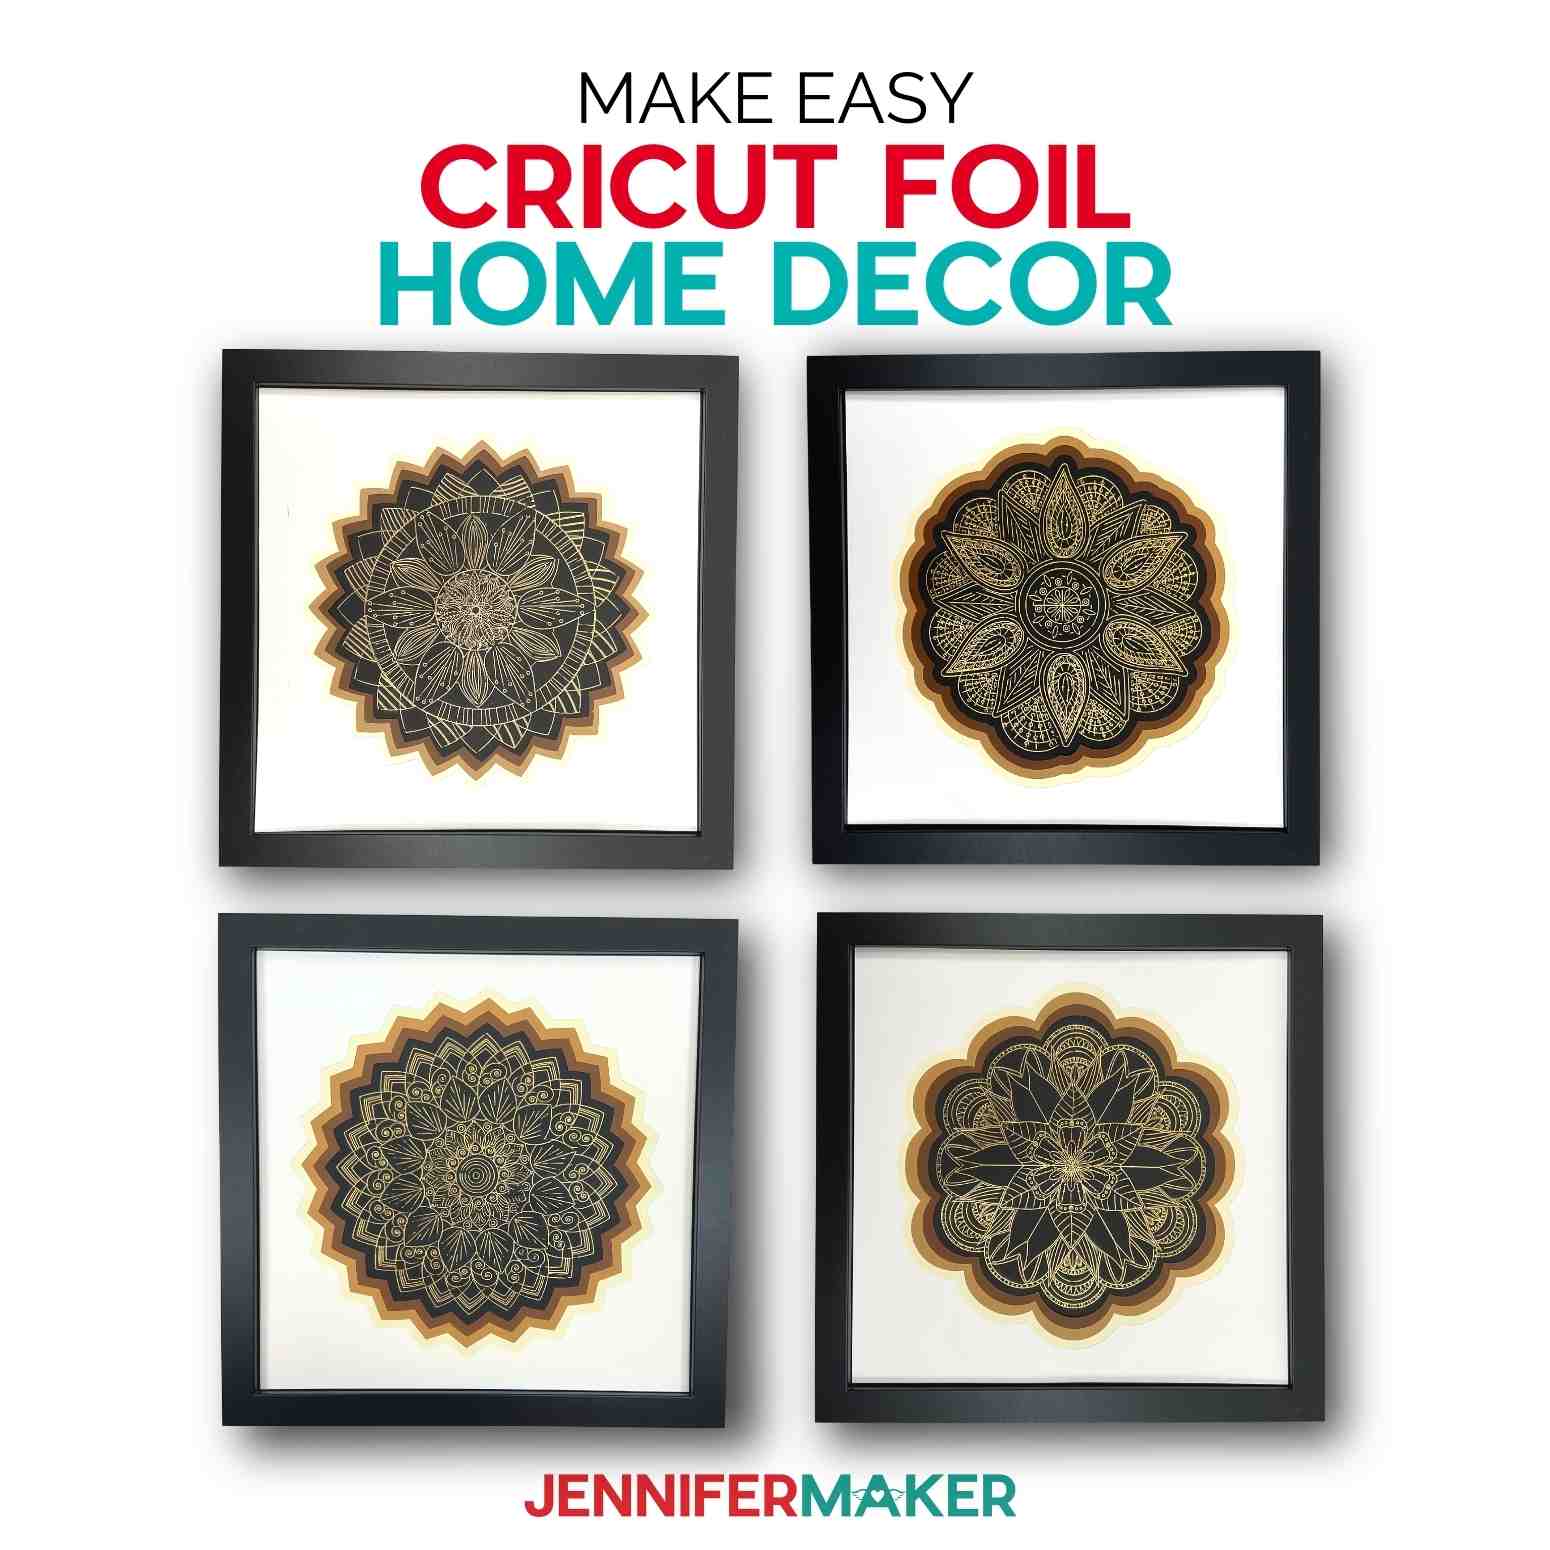 How to Make Cricut Foil Home Decor with Foiled Mandalas - Cricut foil home decor projects in frames